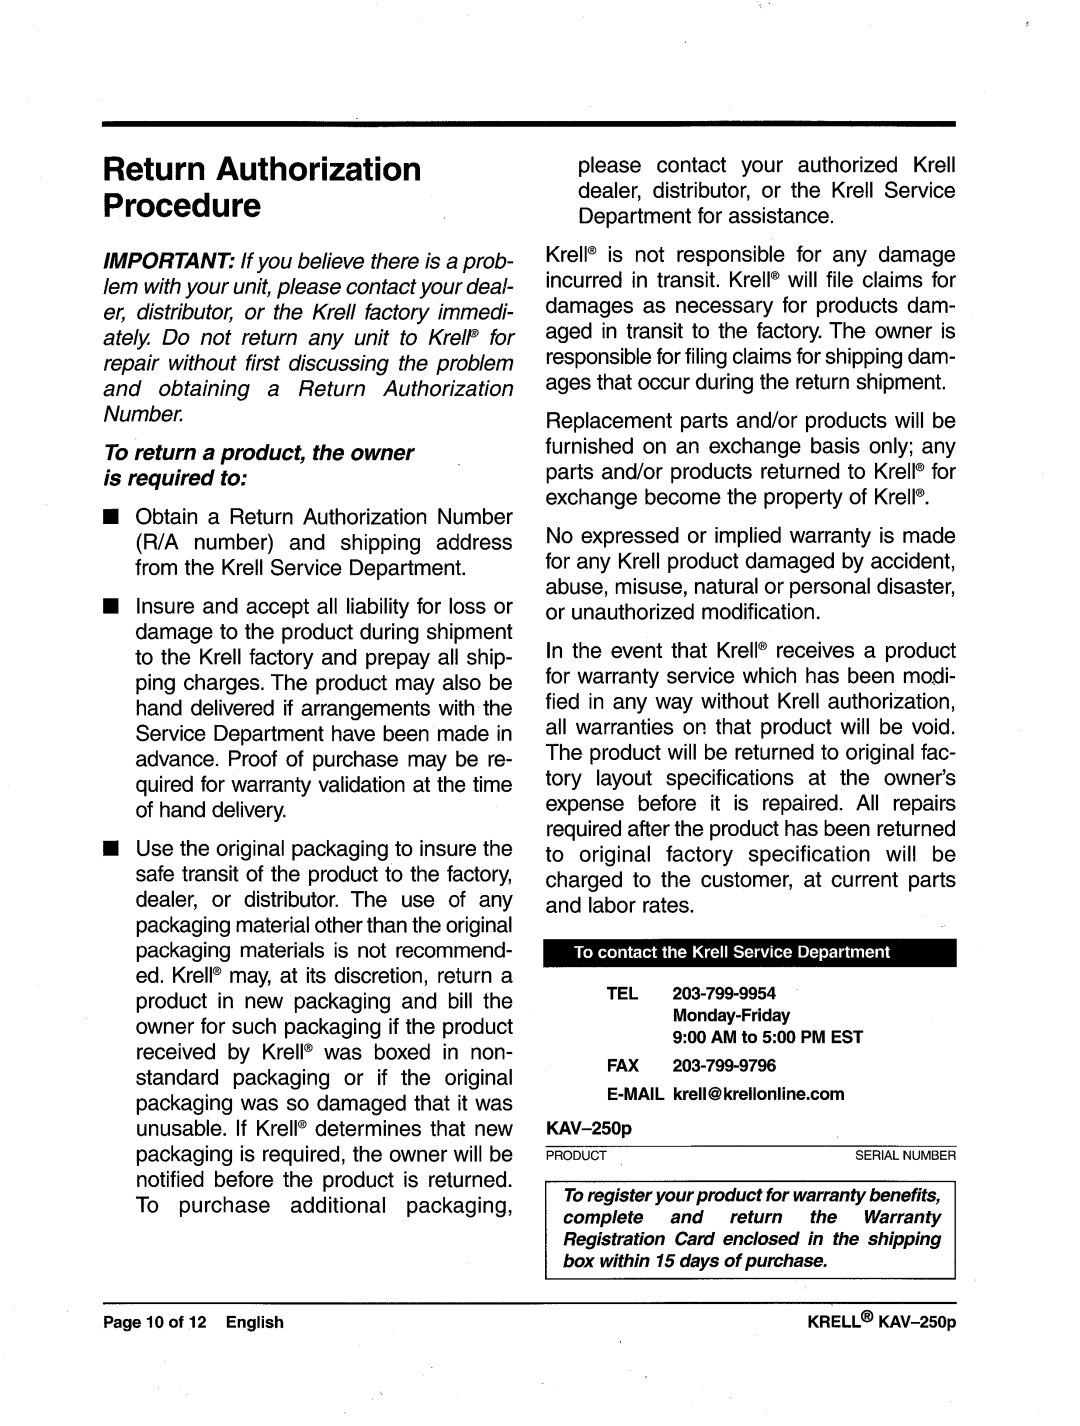 Krell Industries KAV-250p manual ReturnAuthorization Procedure 